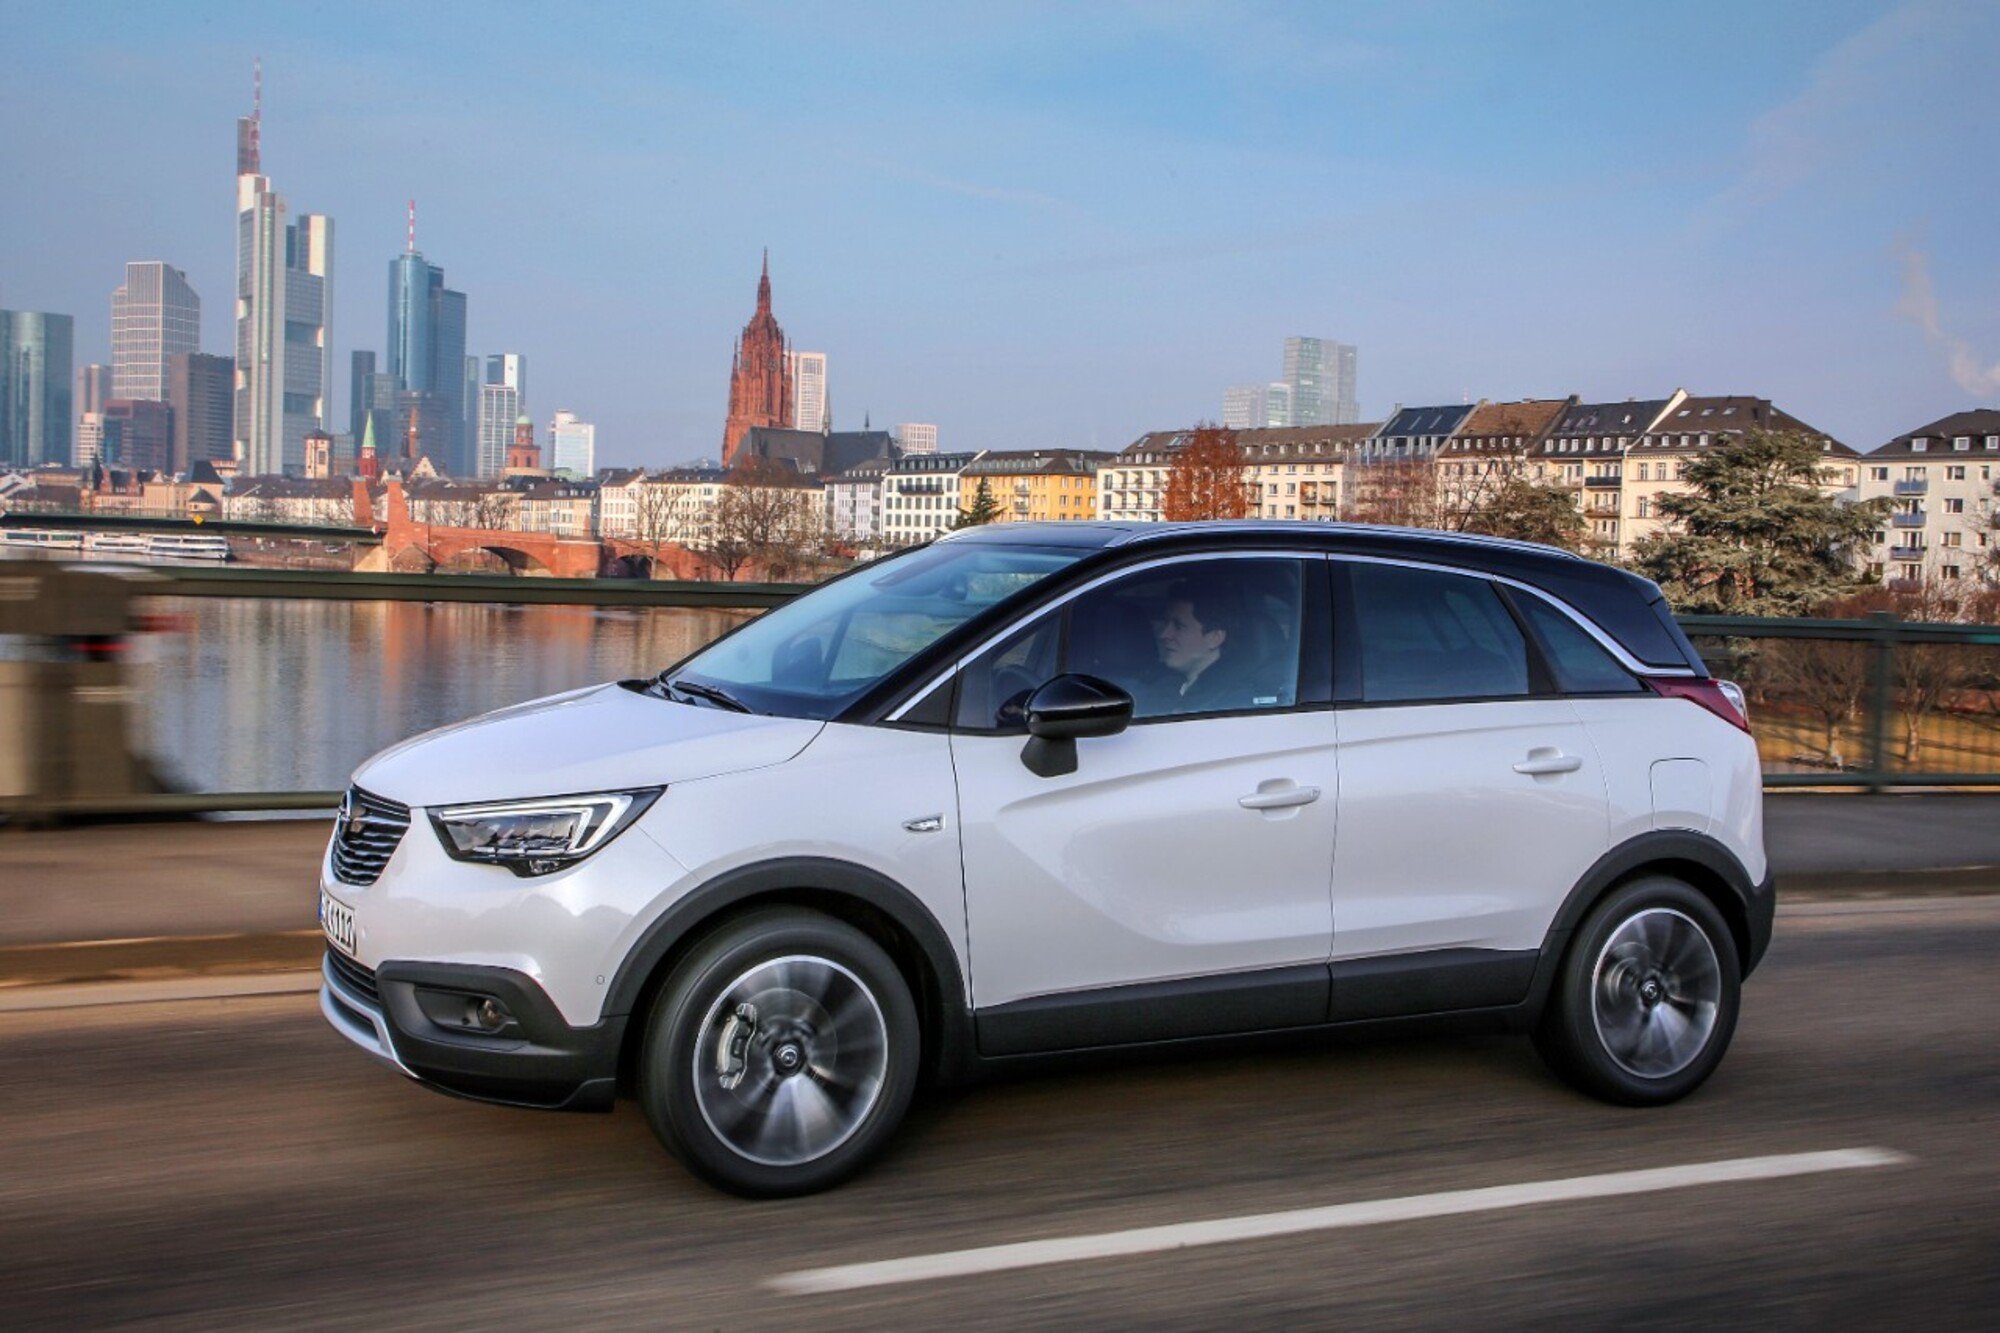 Opel Crossland X 2017, la nuova Meriva | primo test [Video]